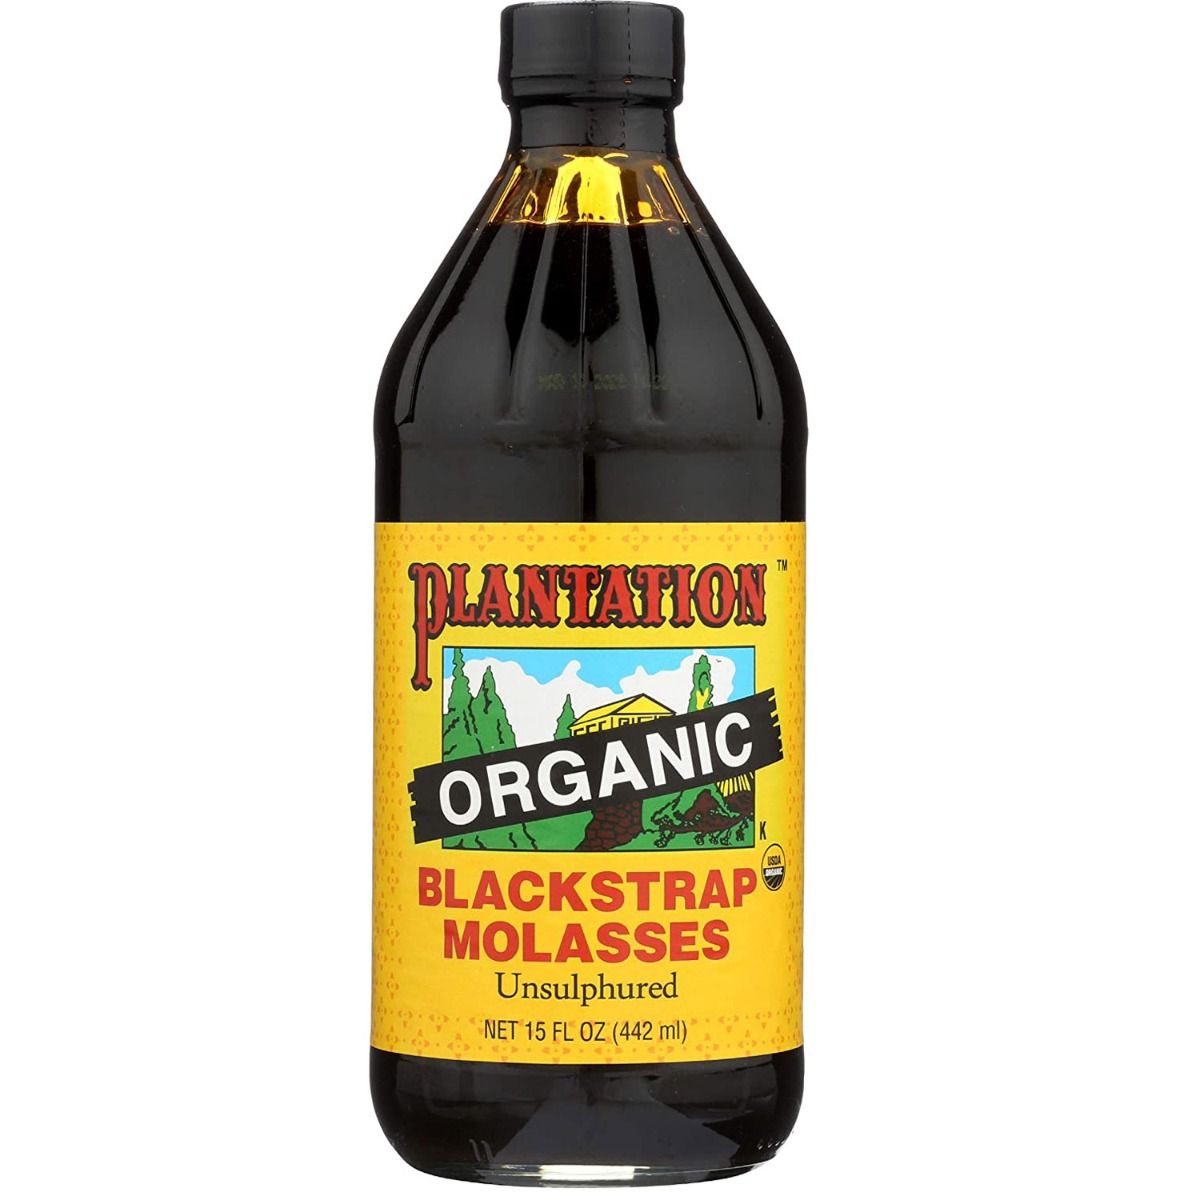 Plantation Organic Blackstrap Molasses 442ml, Pack of 1 